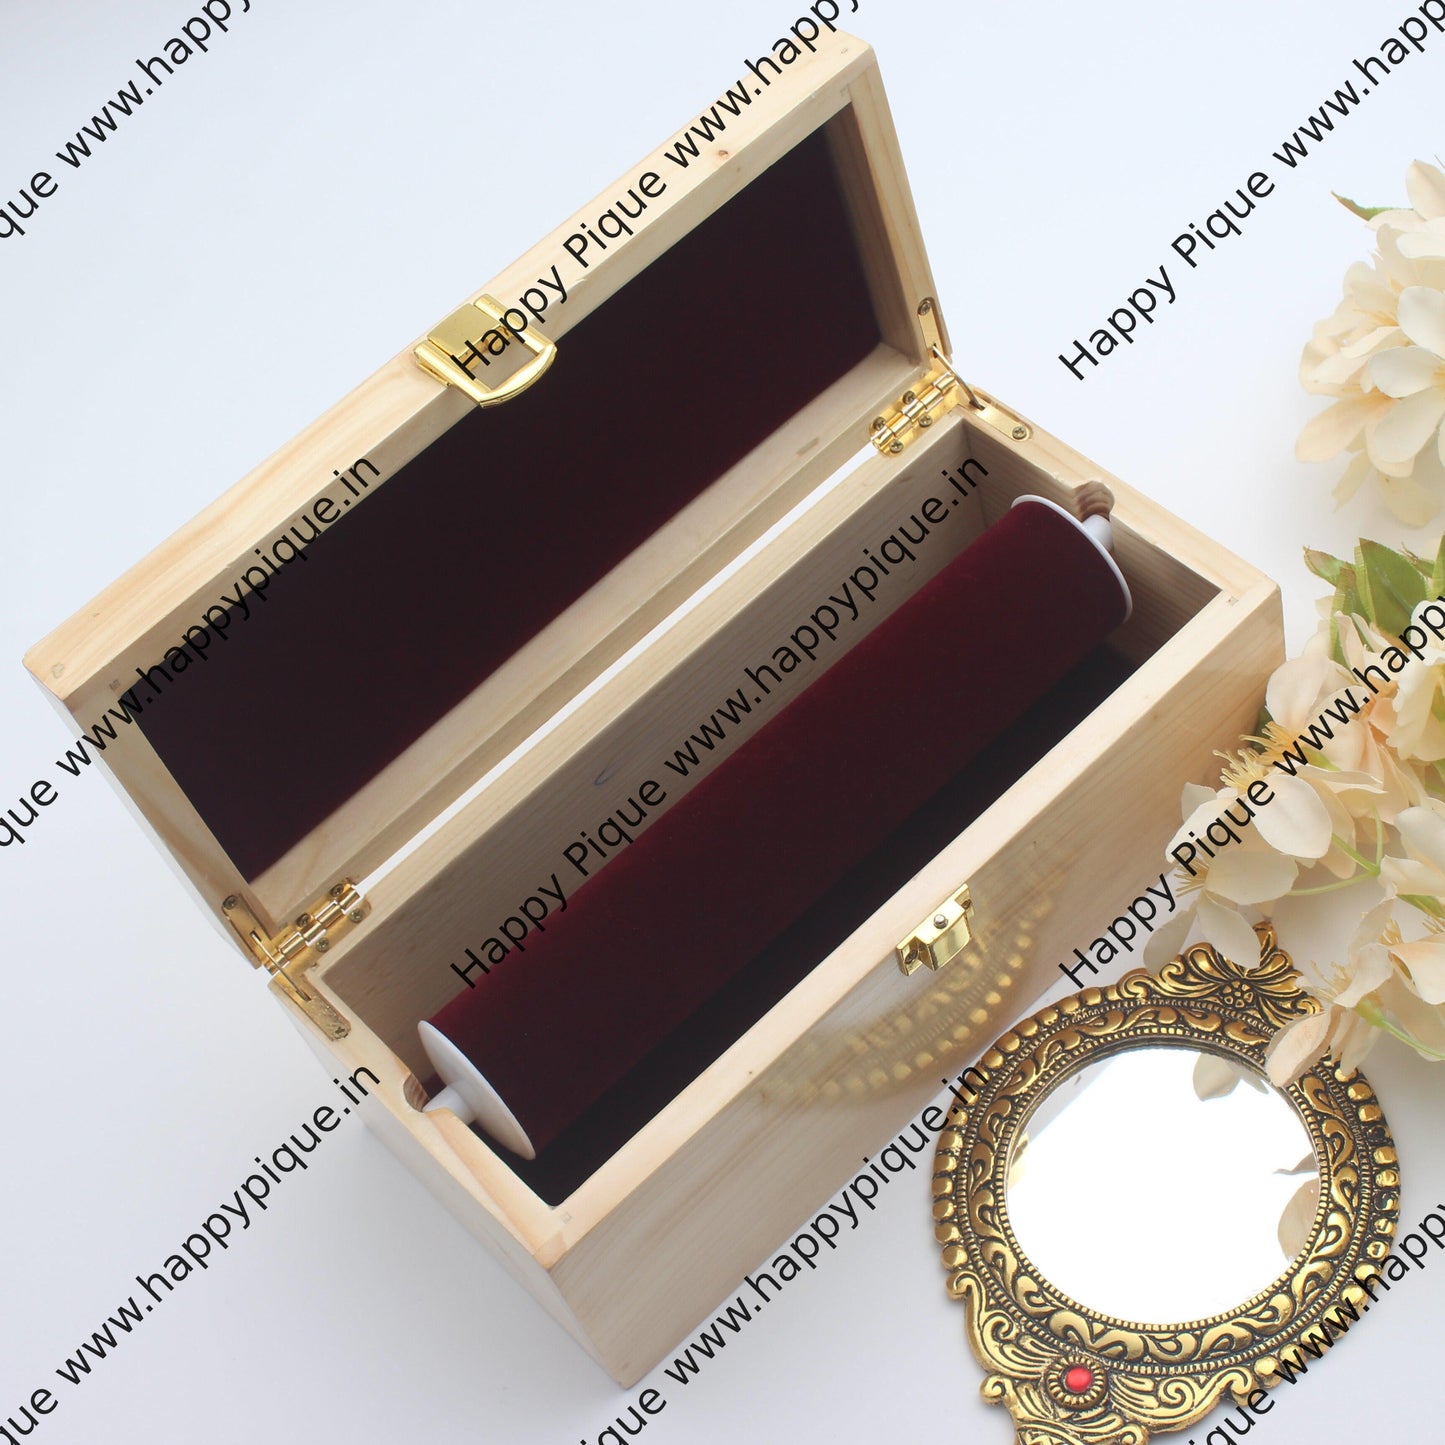 Solid Wood Single Rod Bangle Box - Jewellery Storage Box